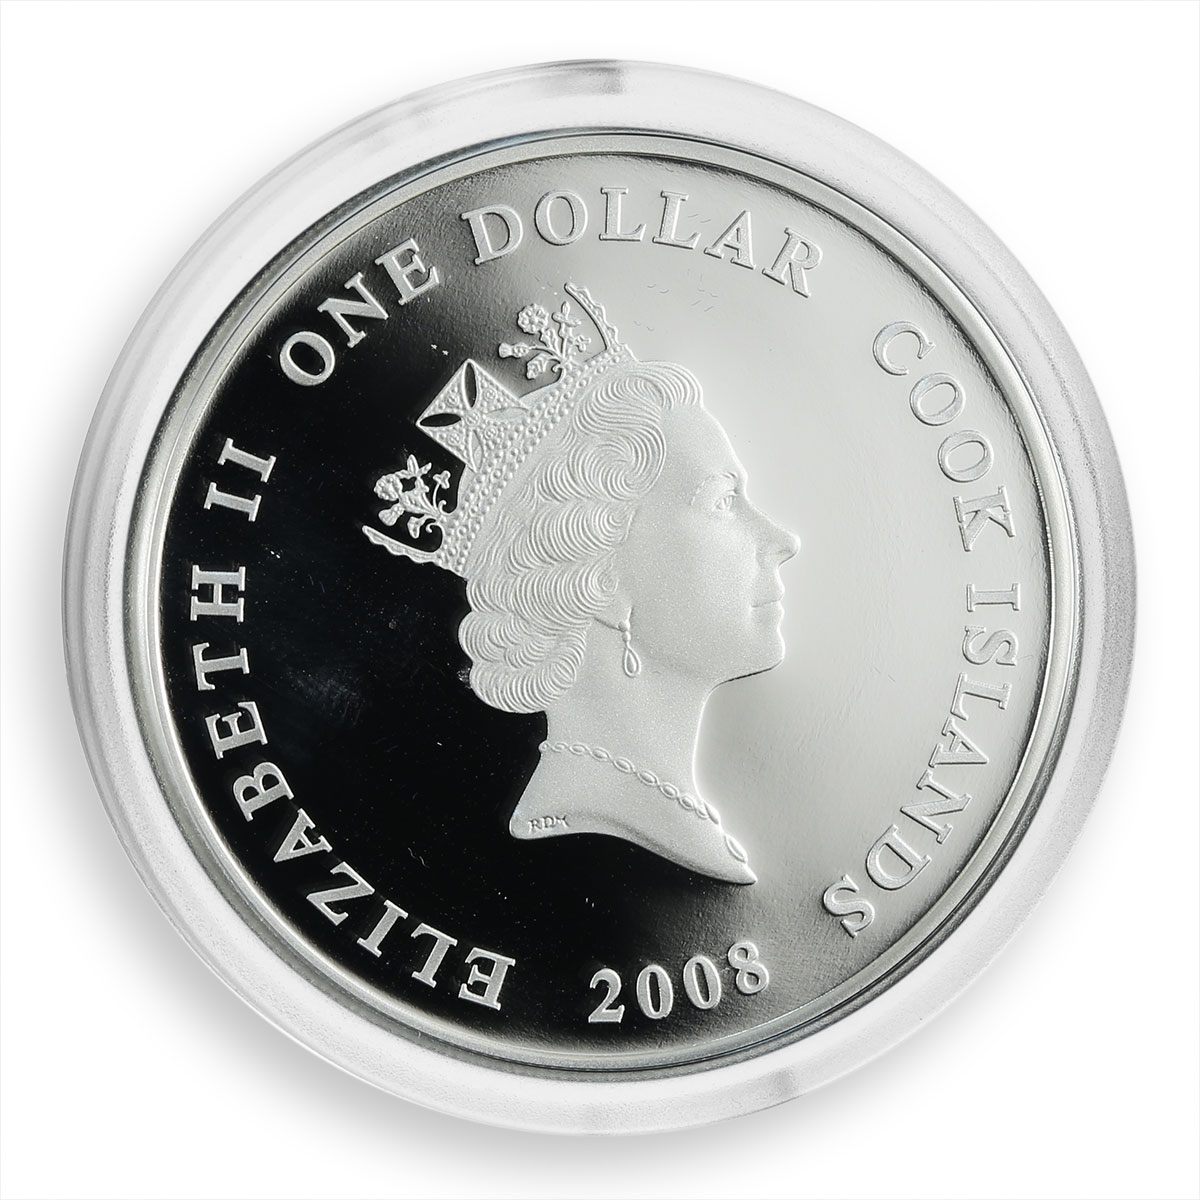 Cook Islands,1 dollar, Antonov An-74, Ukraine Aviation, 1 Oz Silver Coin, 2008